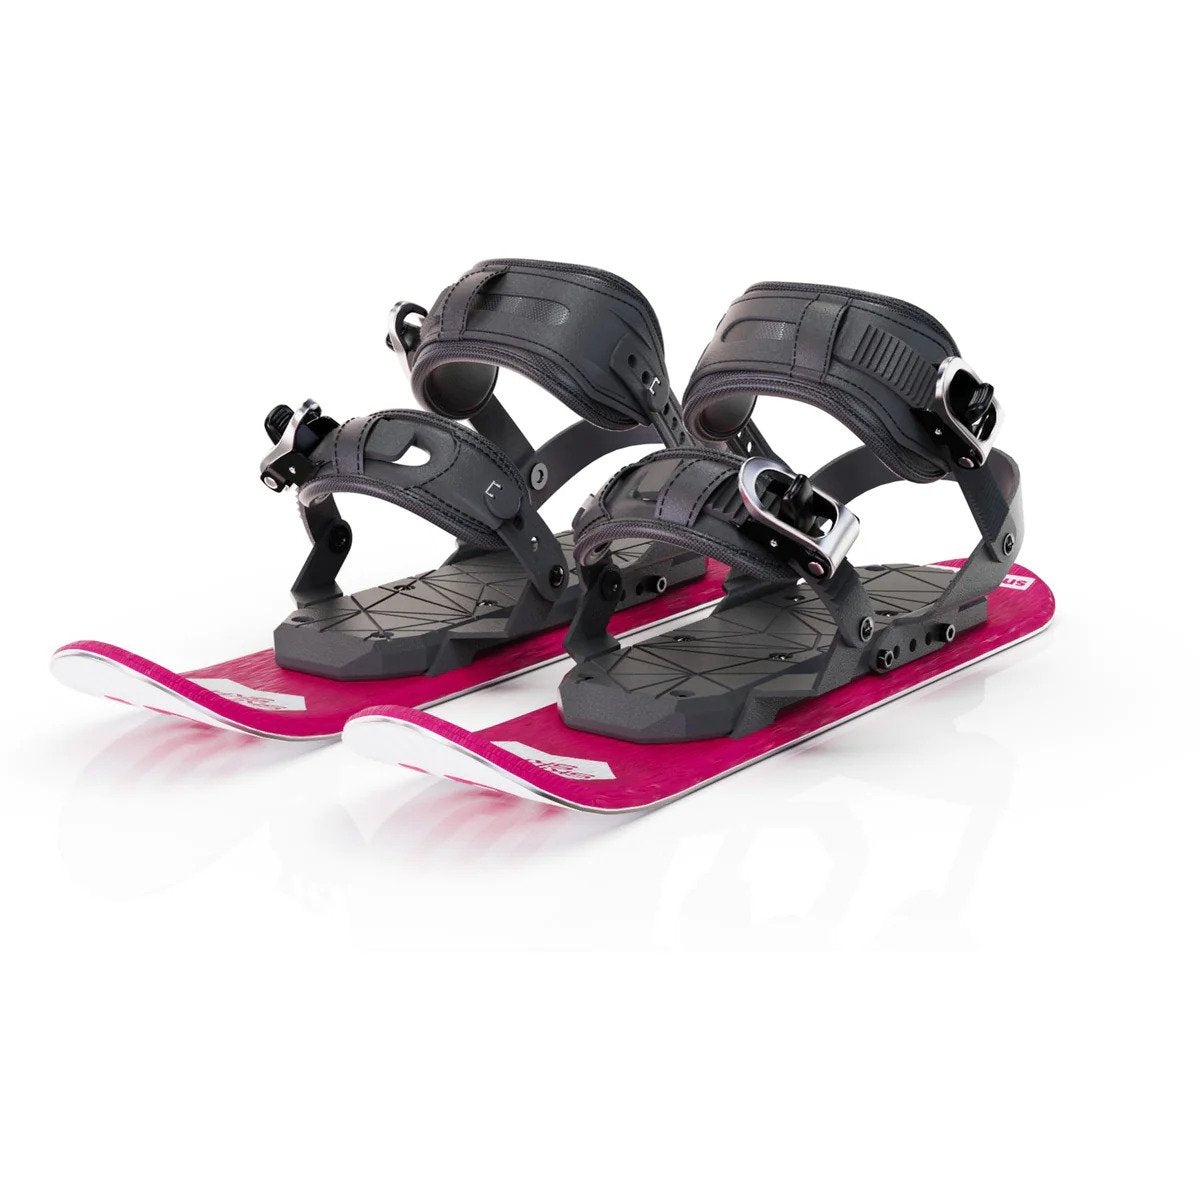 Skiskates - Mini Skis - Official Website - Reviews | Price $299.90